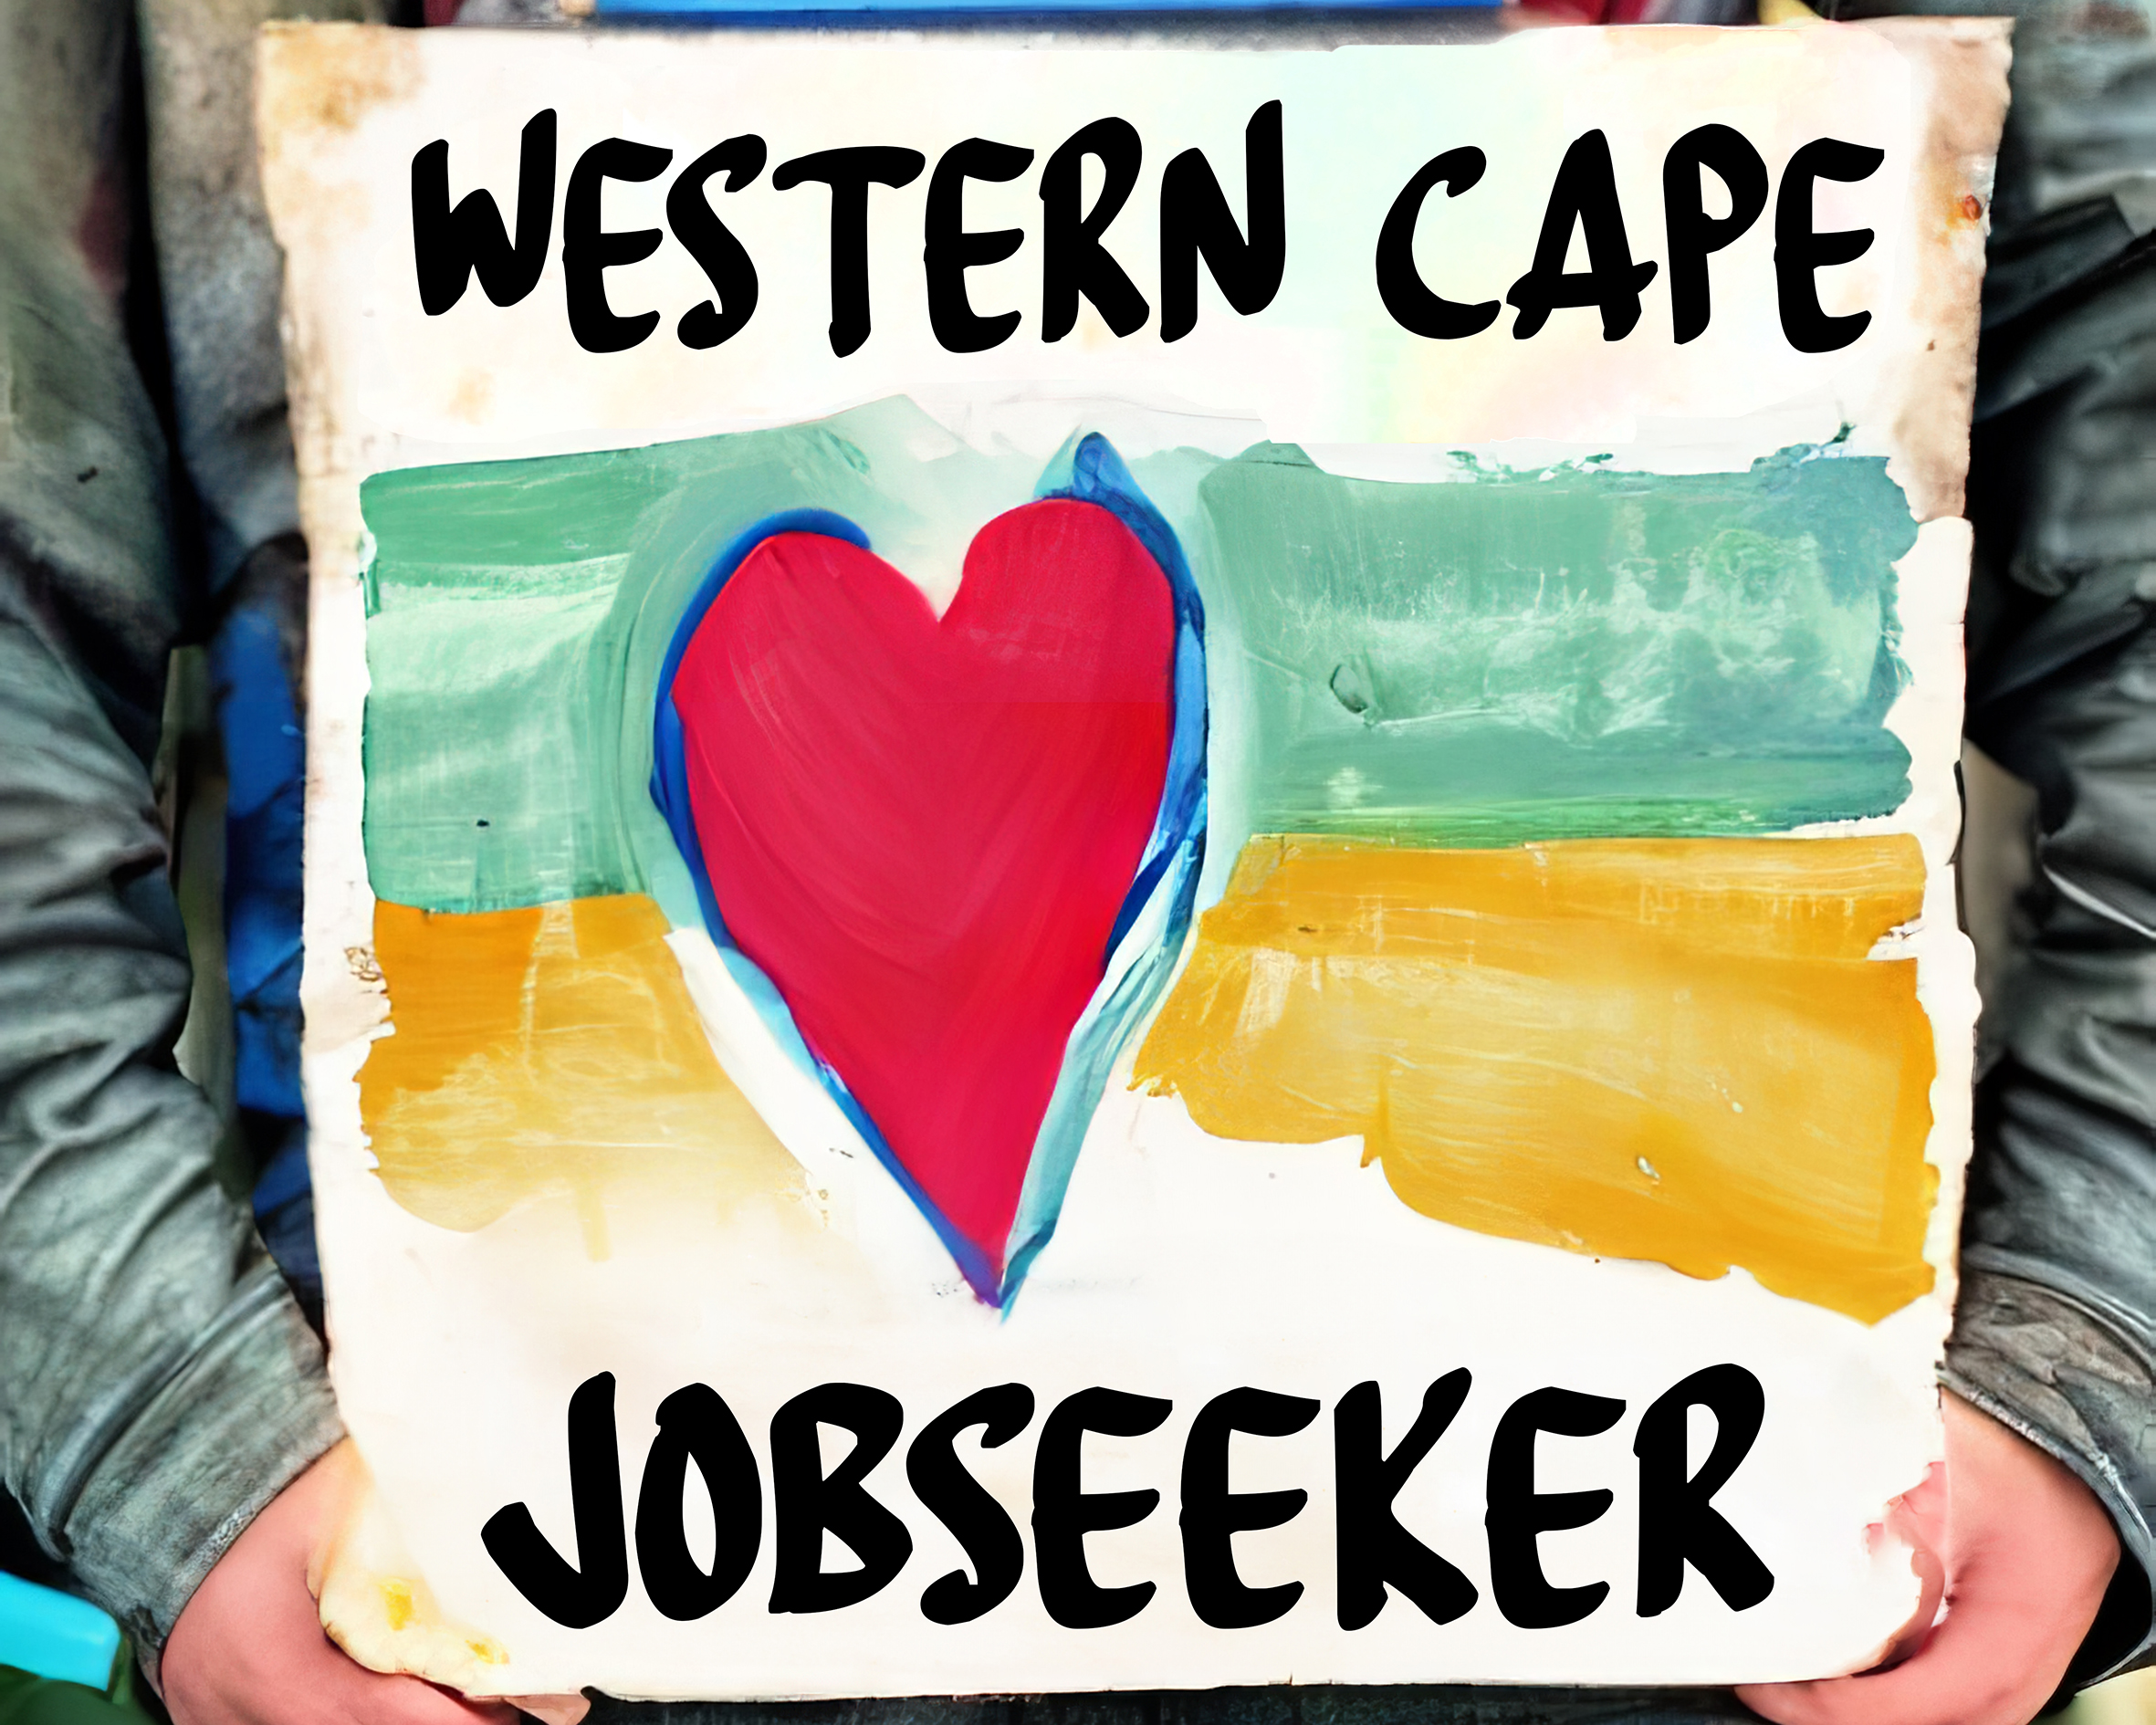 A sign indicating Western Cape jobseeker